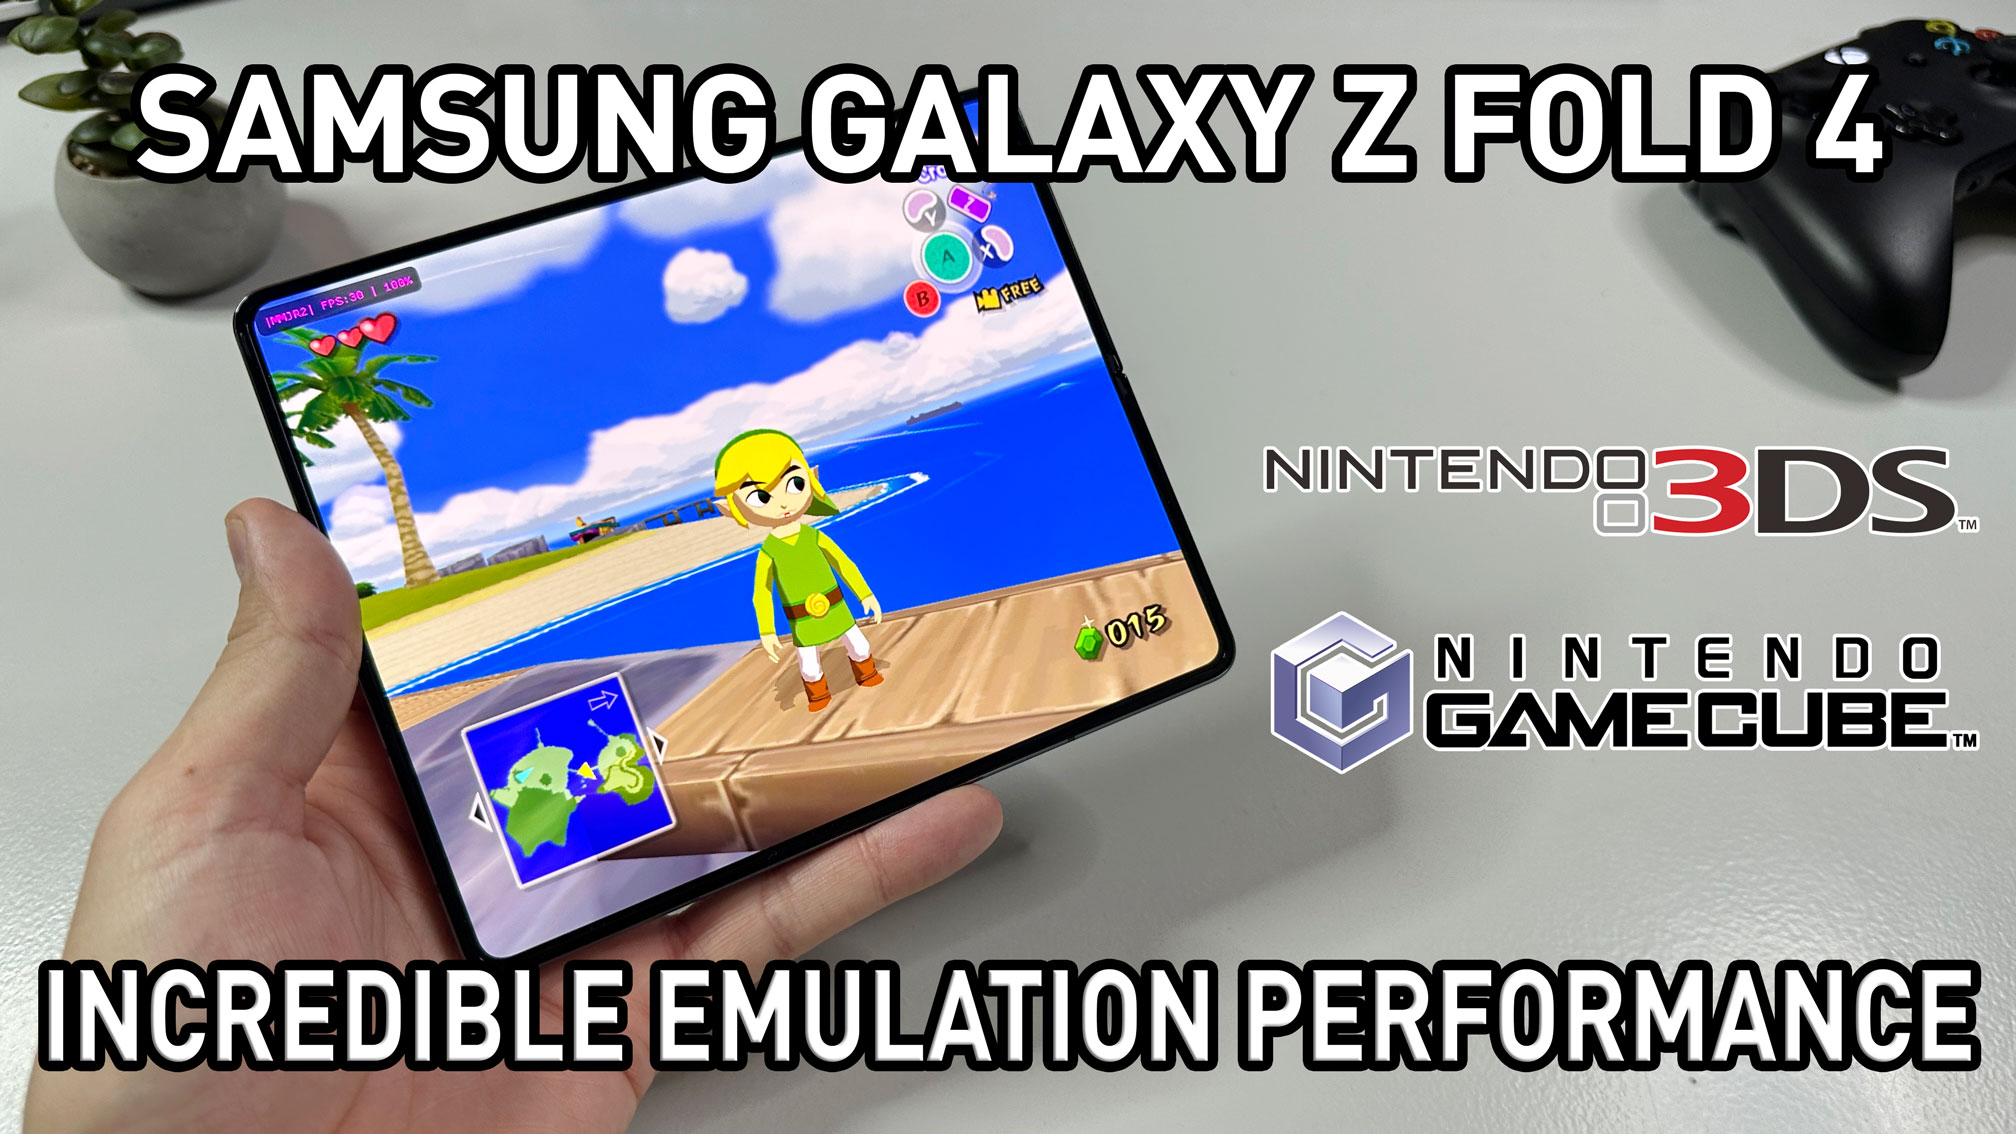 Samsung Galaxy Z Fold 4 Emulation Performance